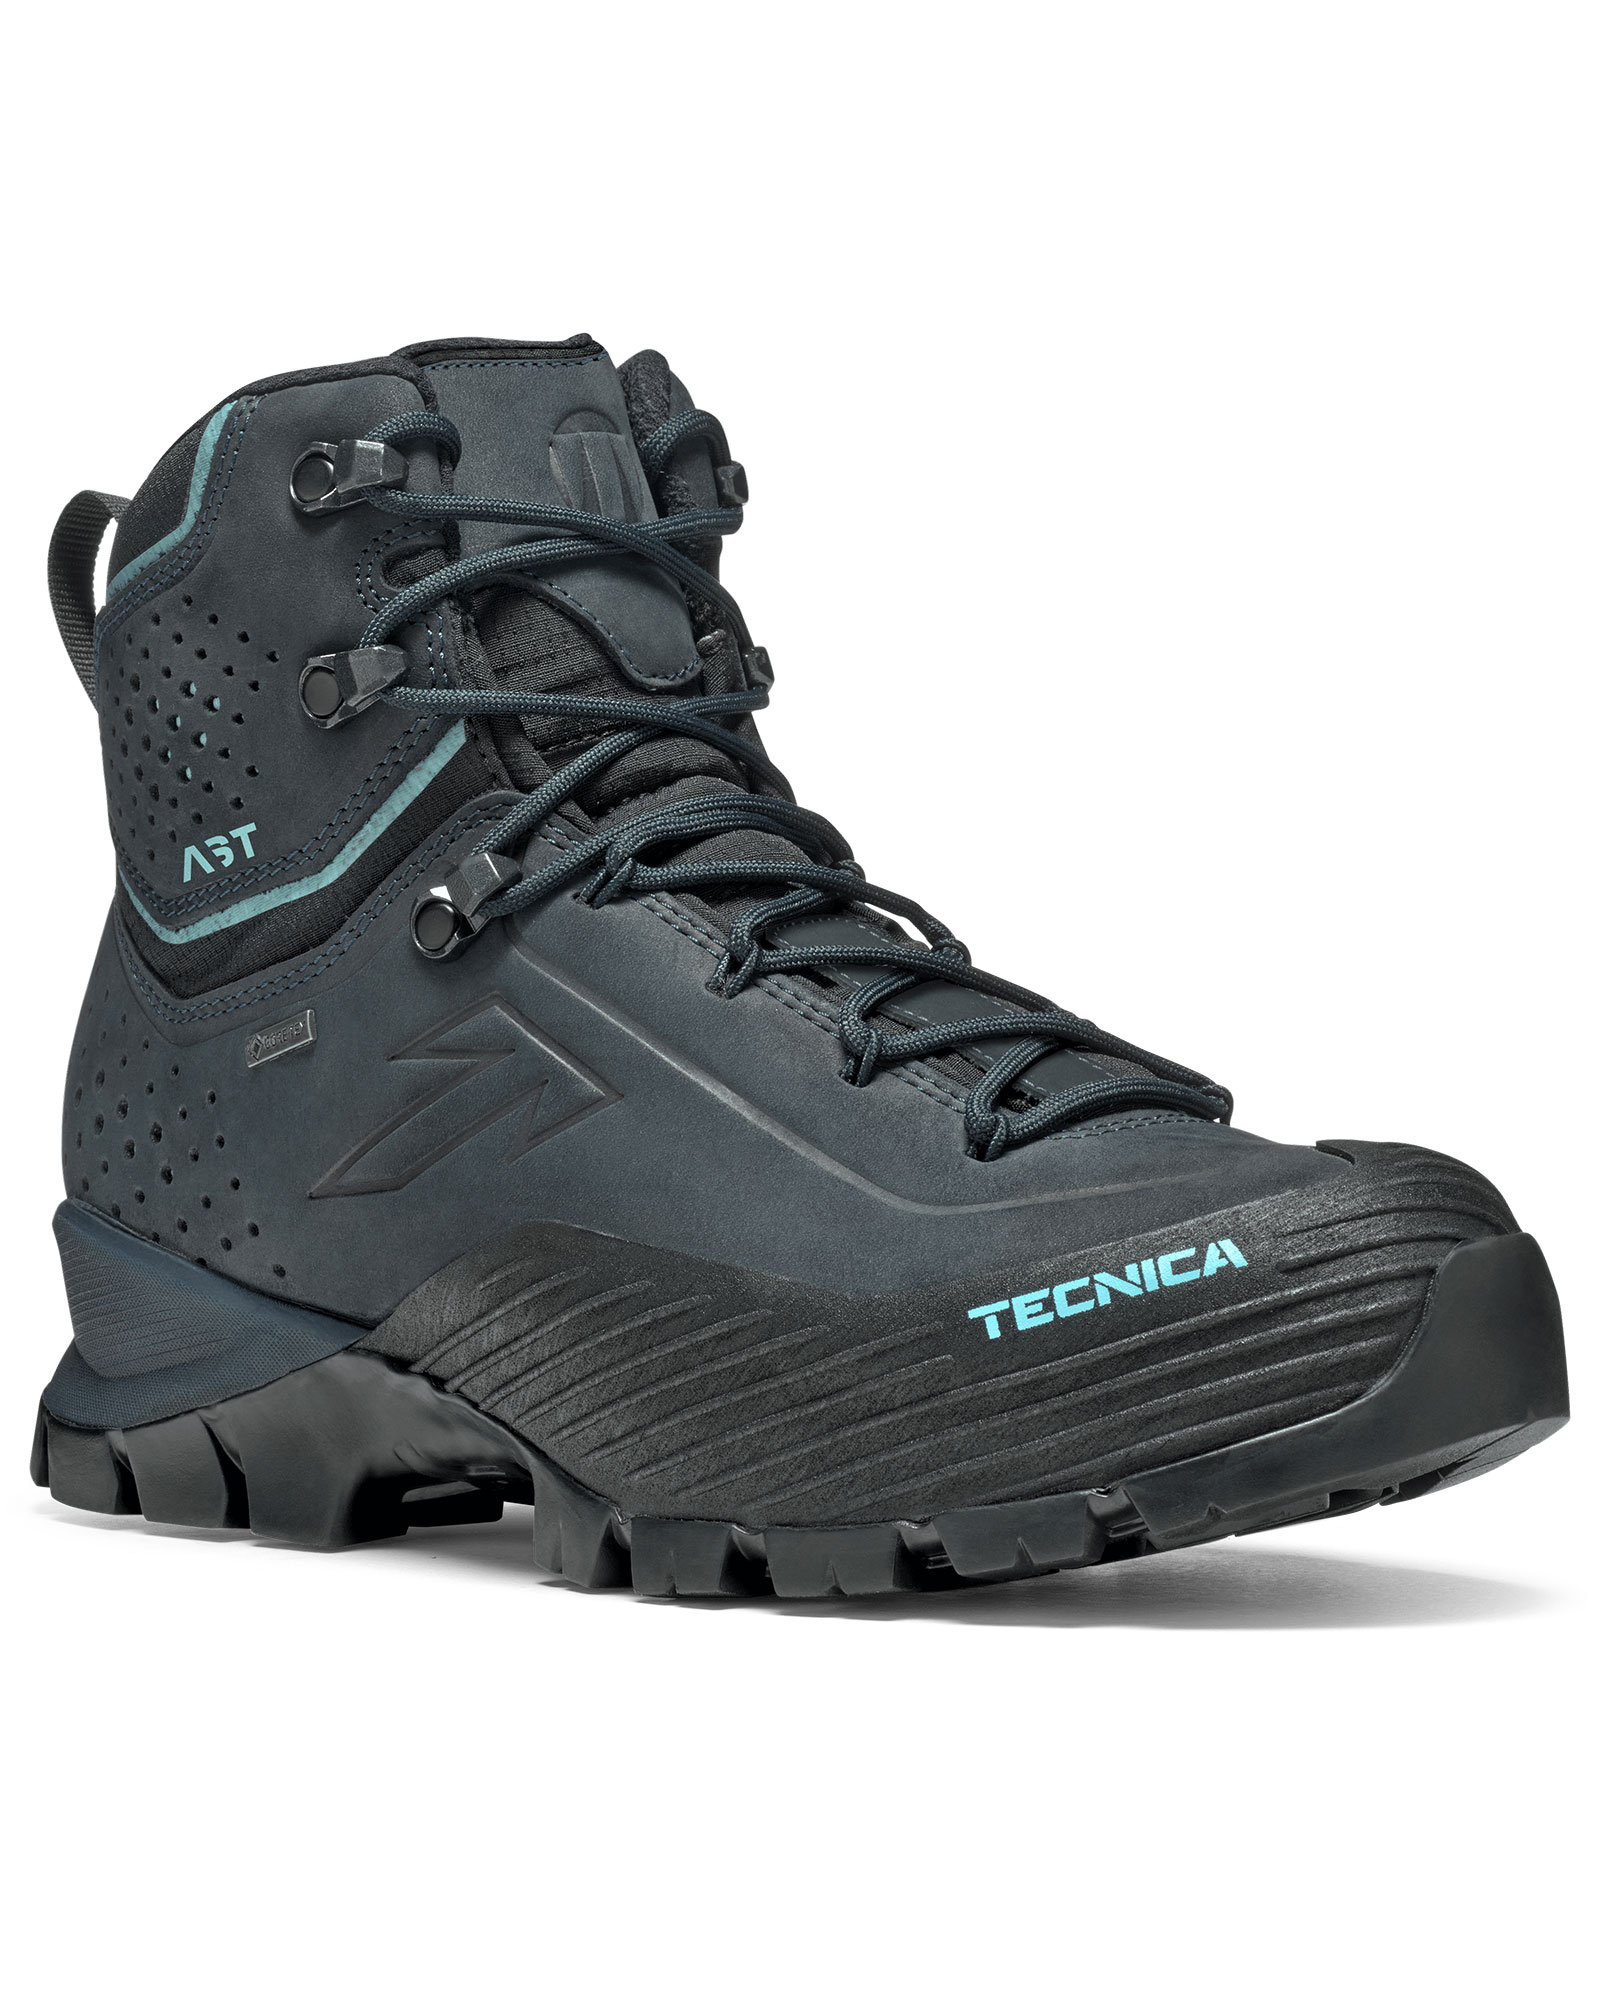 Tecnica Forge 2.0 GORE TEX Women’s Boots - Dark Avio/Light Blueness UK 6